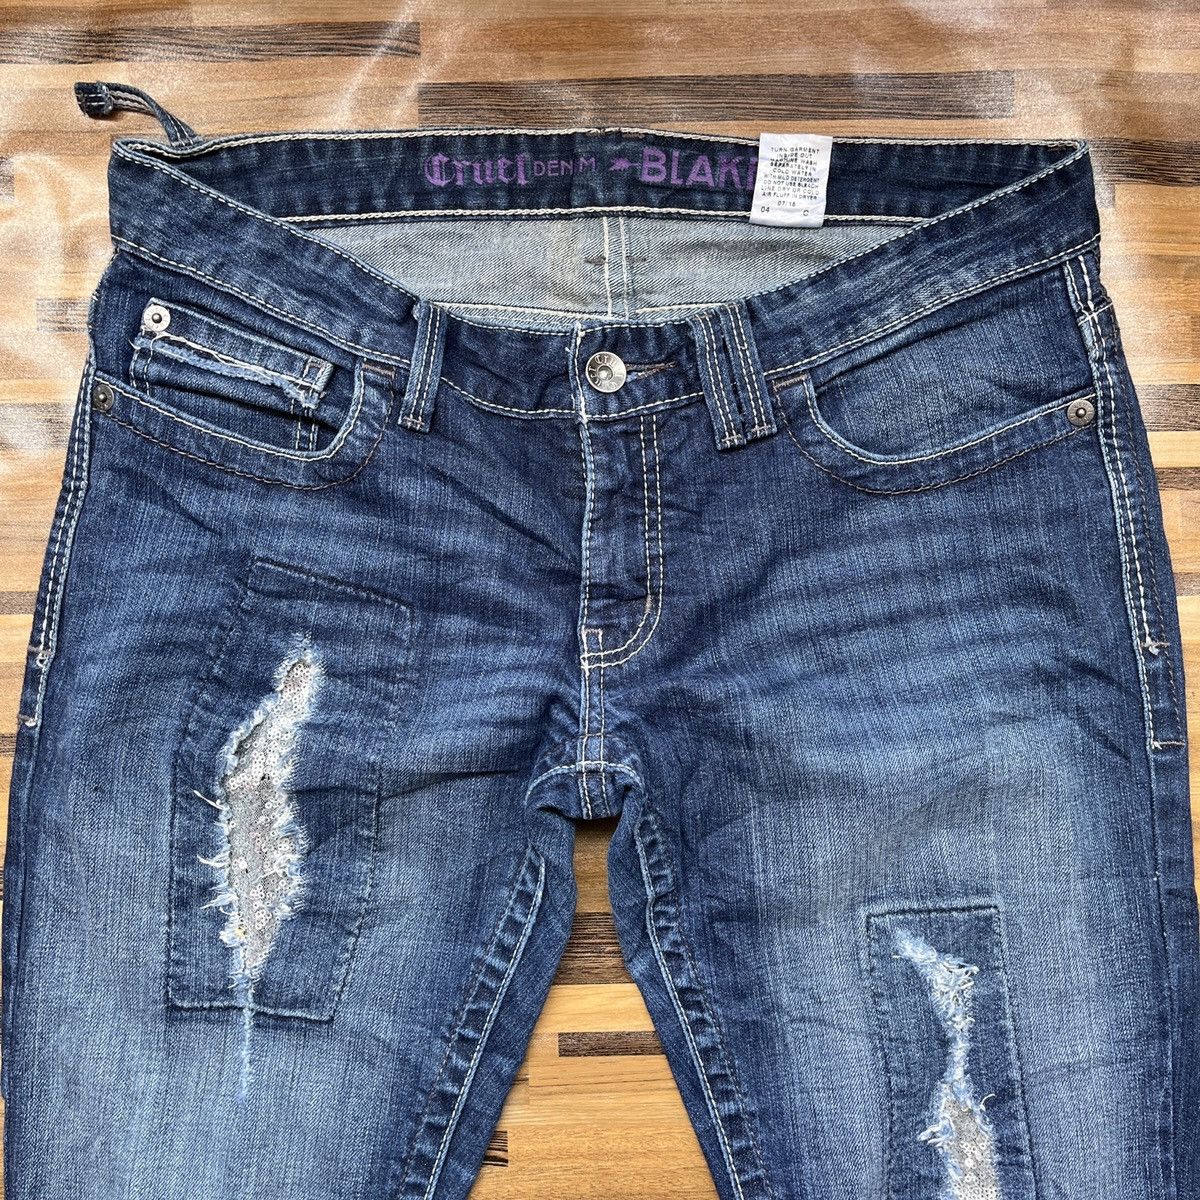 Vintage - Cruel Denim Blake Rocky Mountain Jeans Distressed - 5